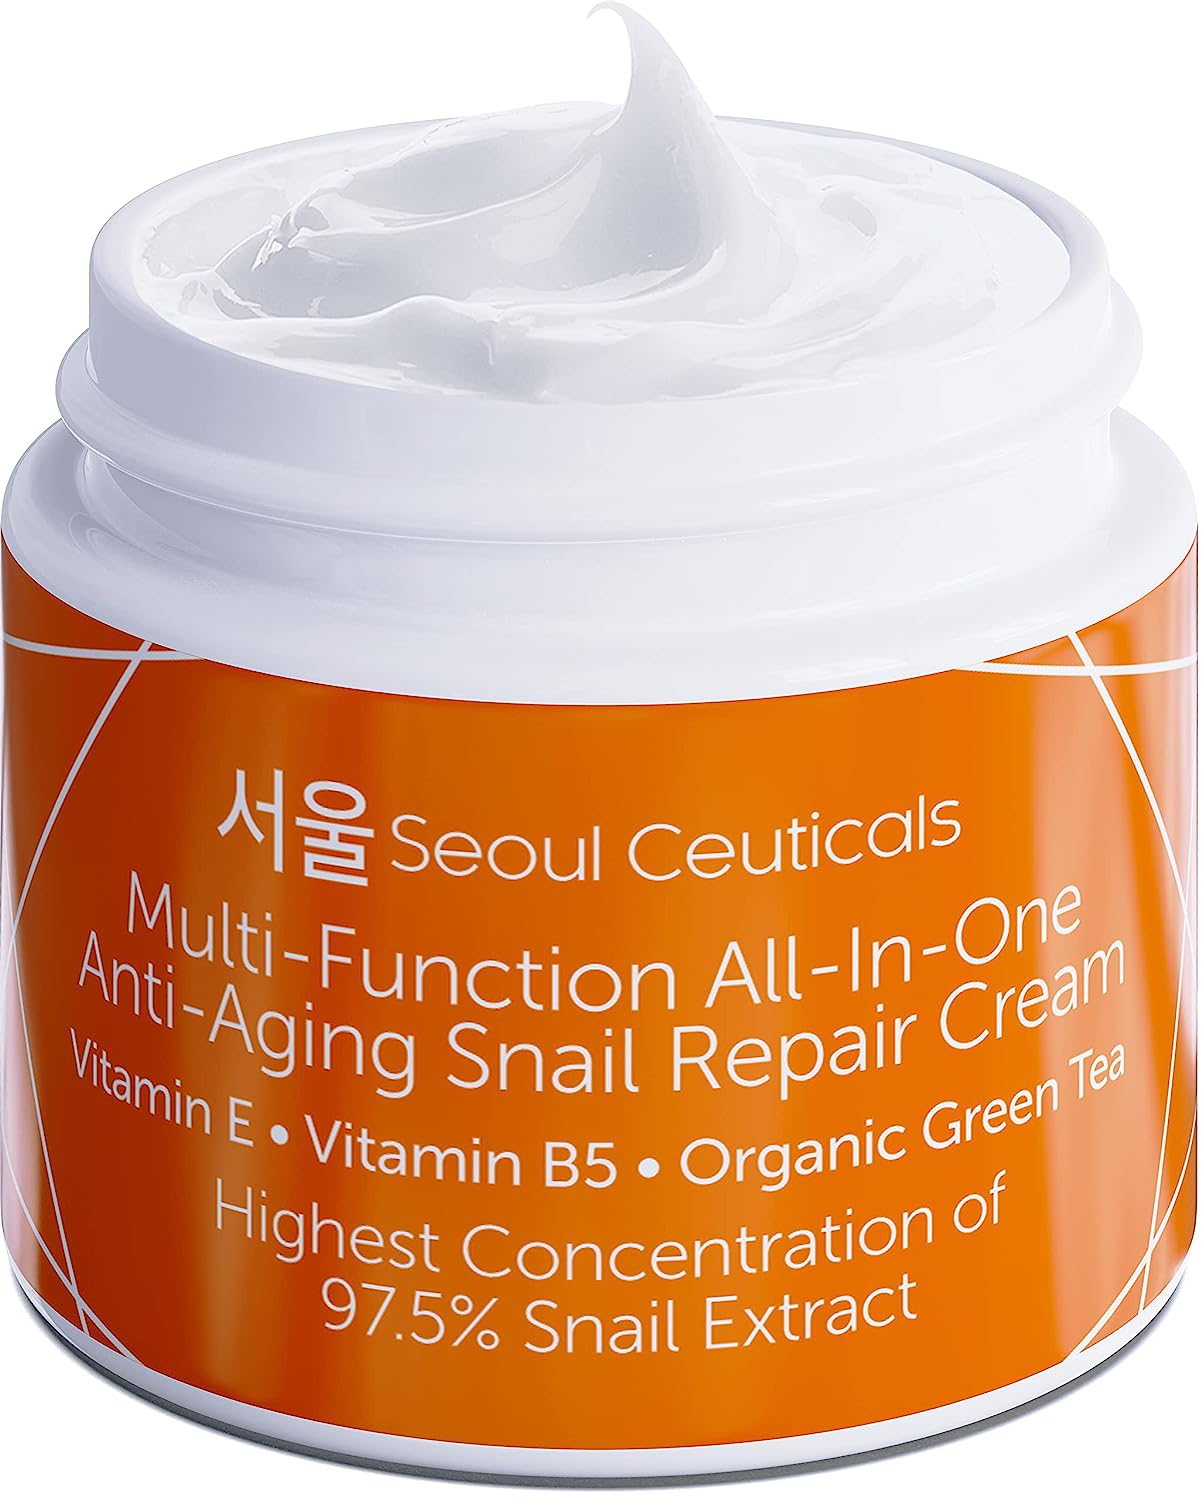 SeoulCeuticals Korean Skin Care 97.5% Snail Mucin Moisturizer Cream - K Beauty Skincare Day & Night Snail Repair Cream Filtrate Cruelty Free 2oz - $15.94